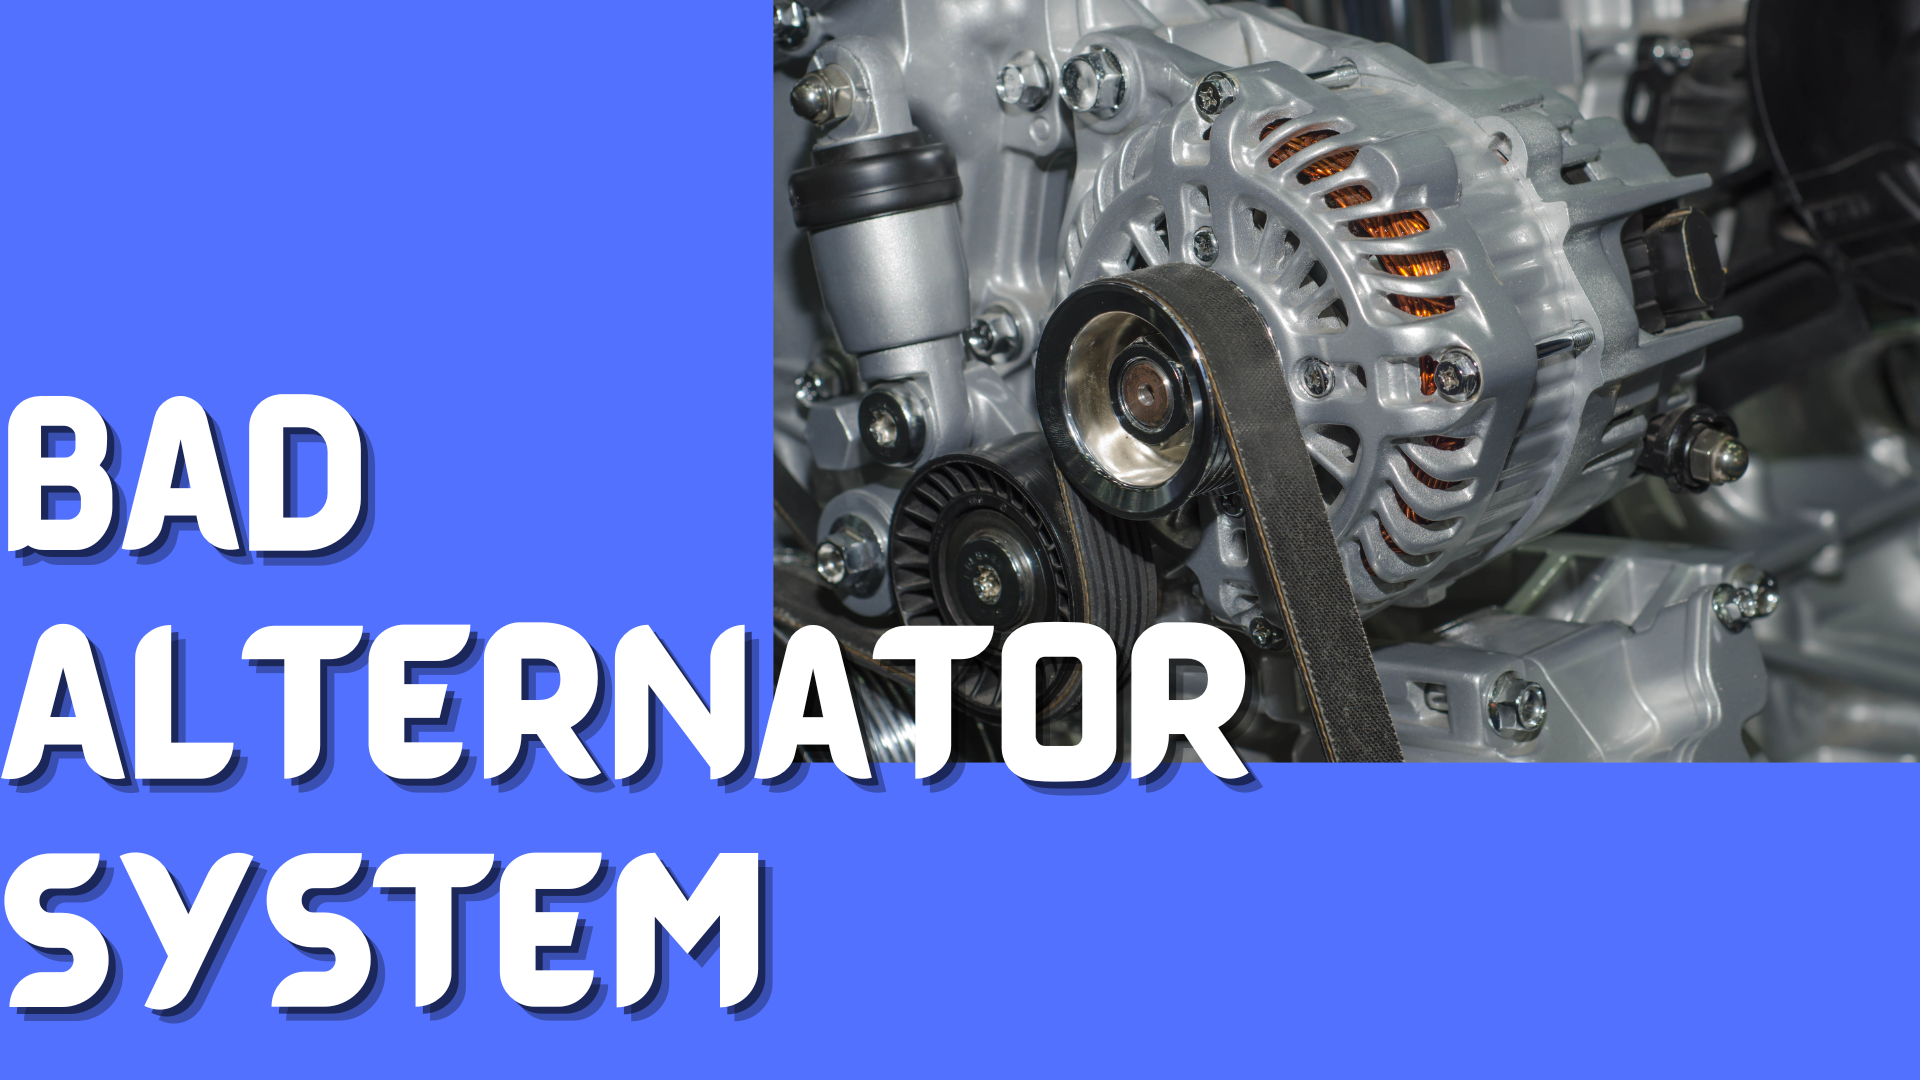 4 Symptoms of Bad Alternator System in a Truck